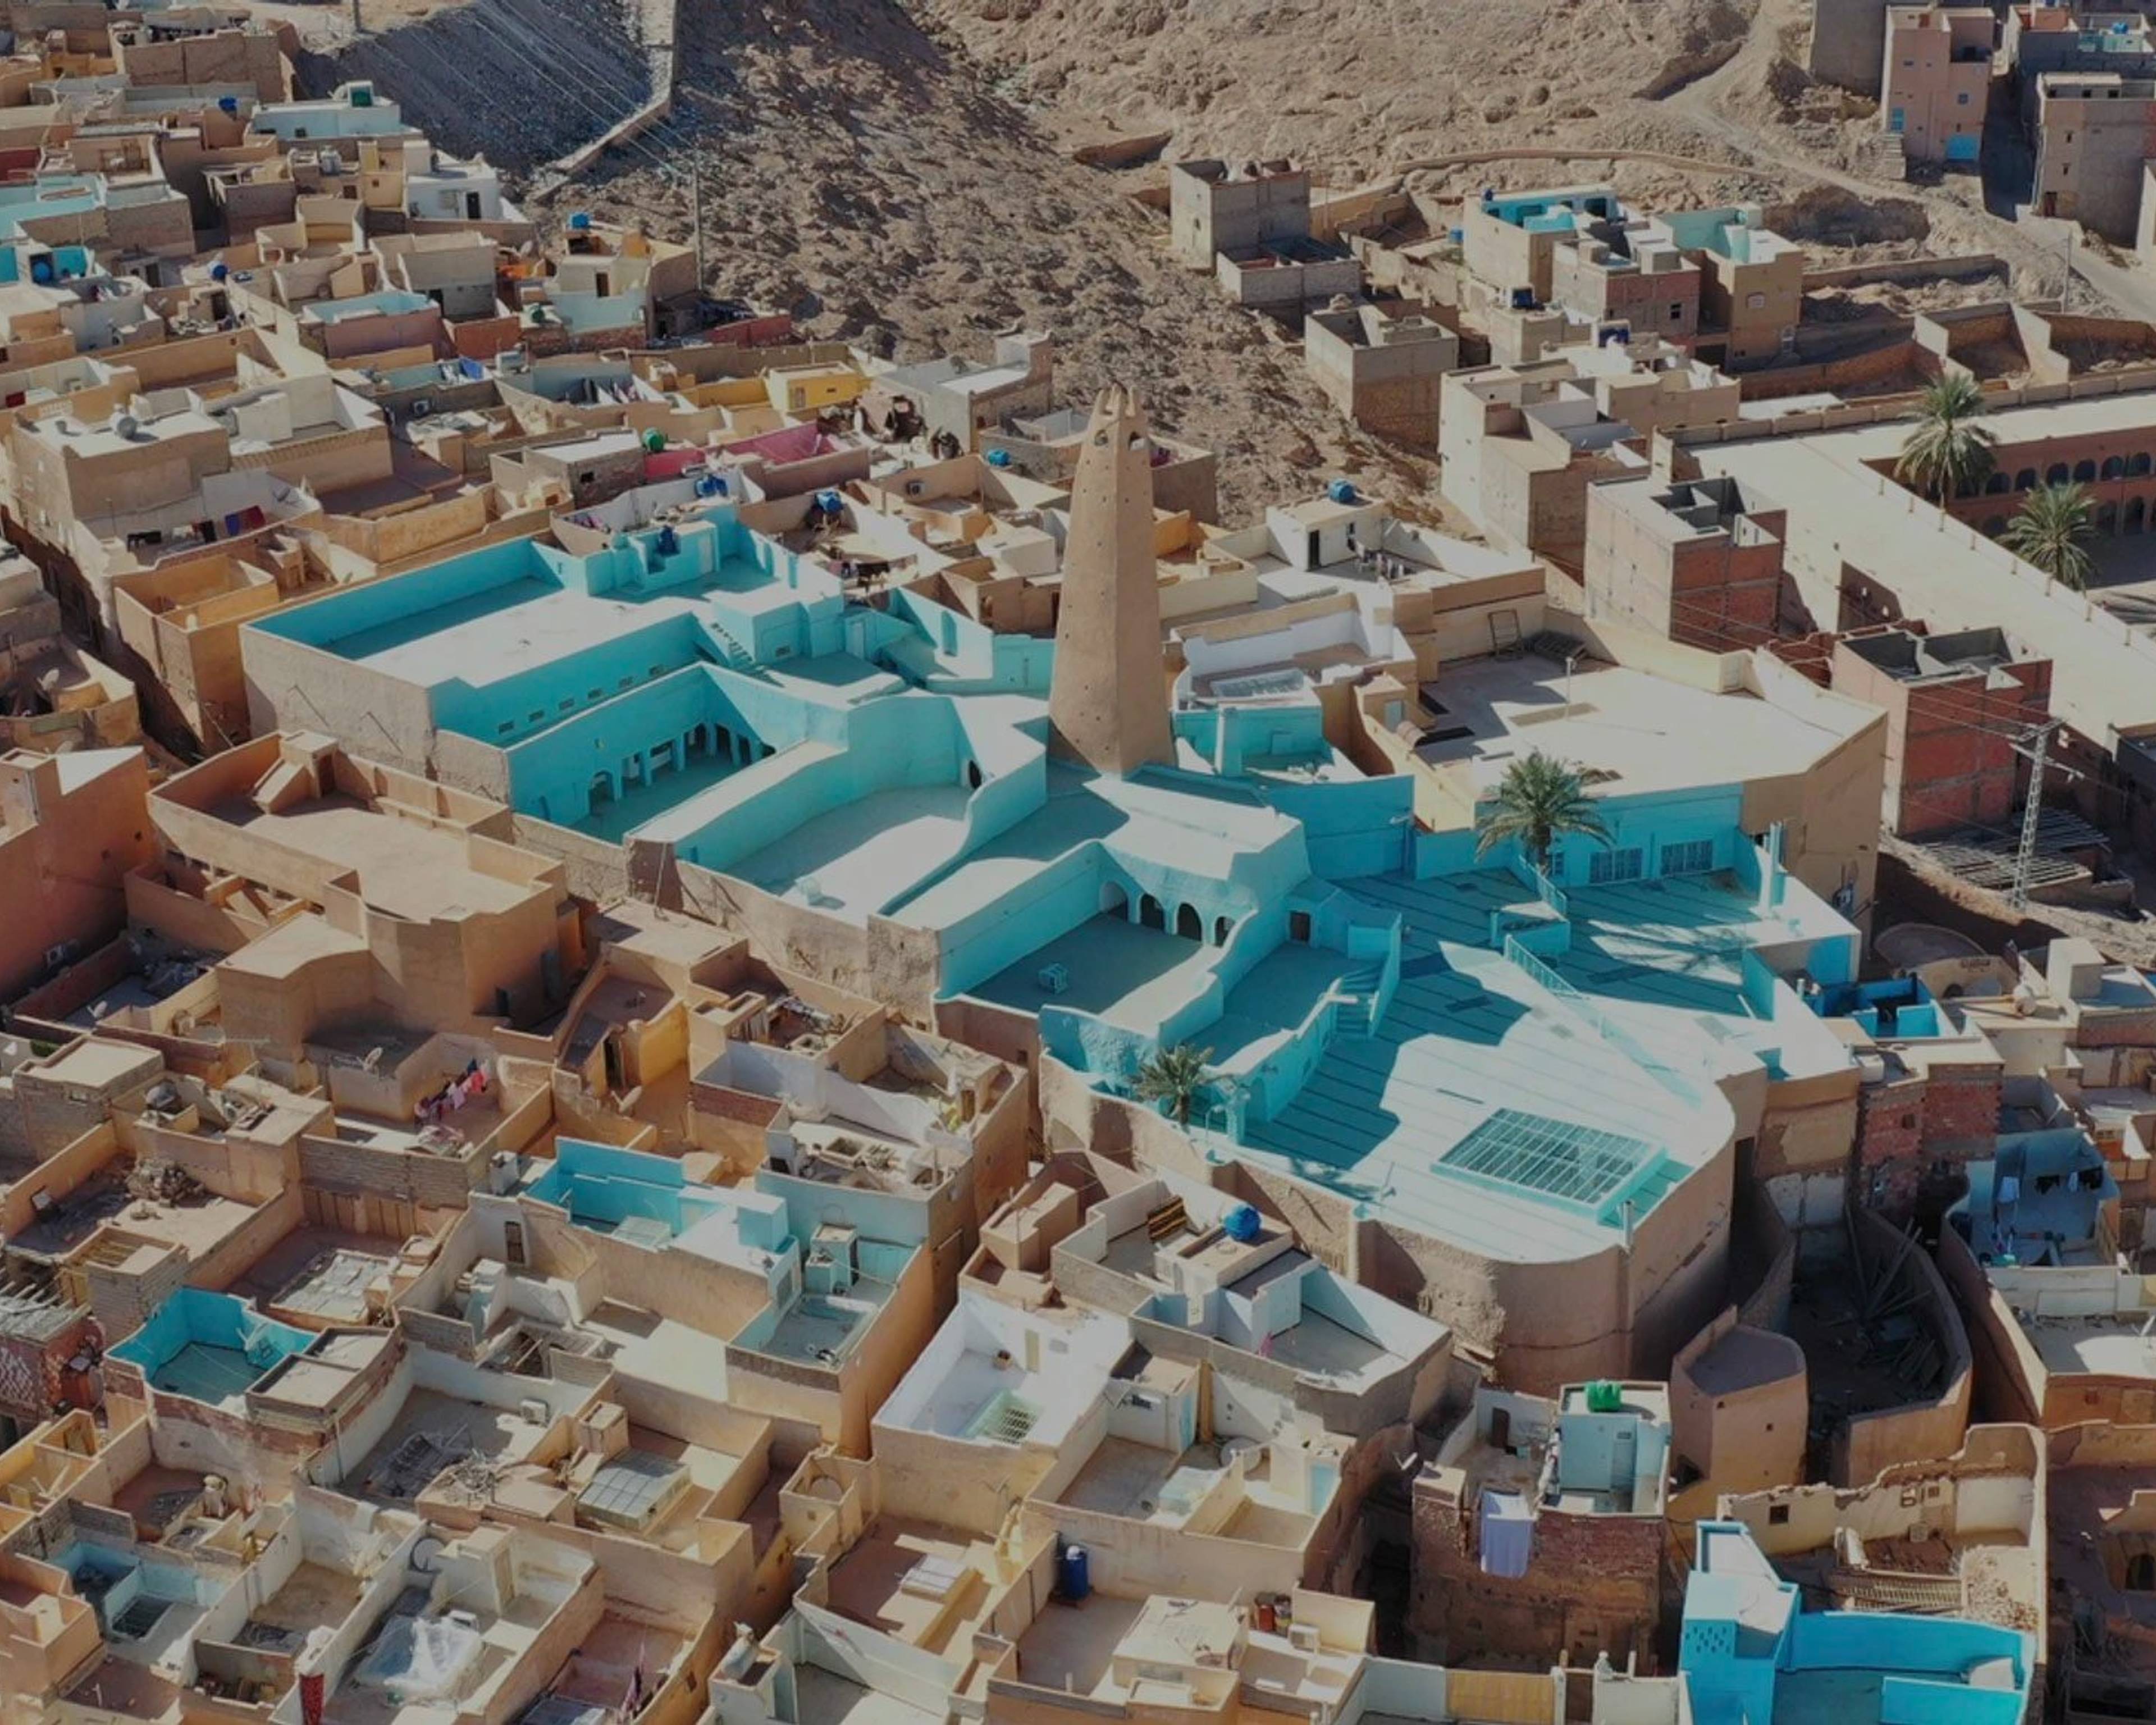 Ghardaia, emblématique cité du Sahara